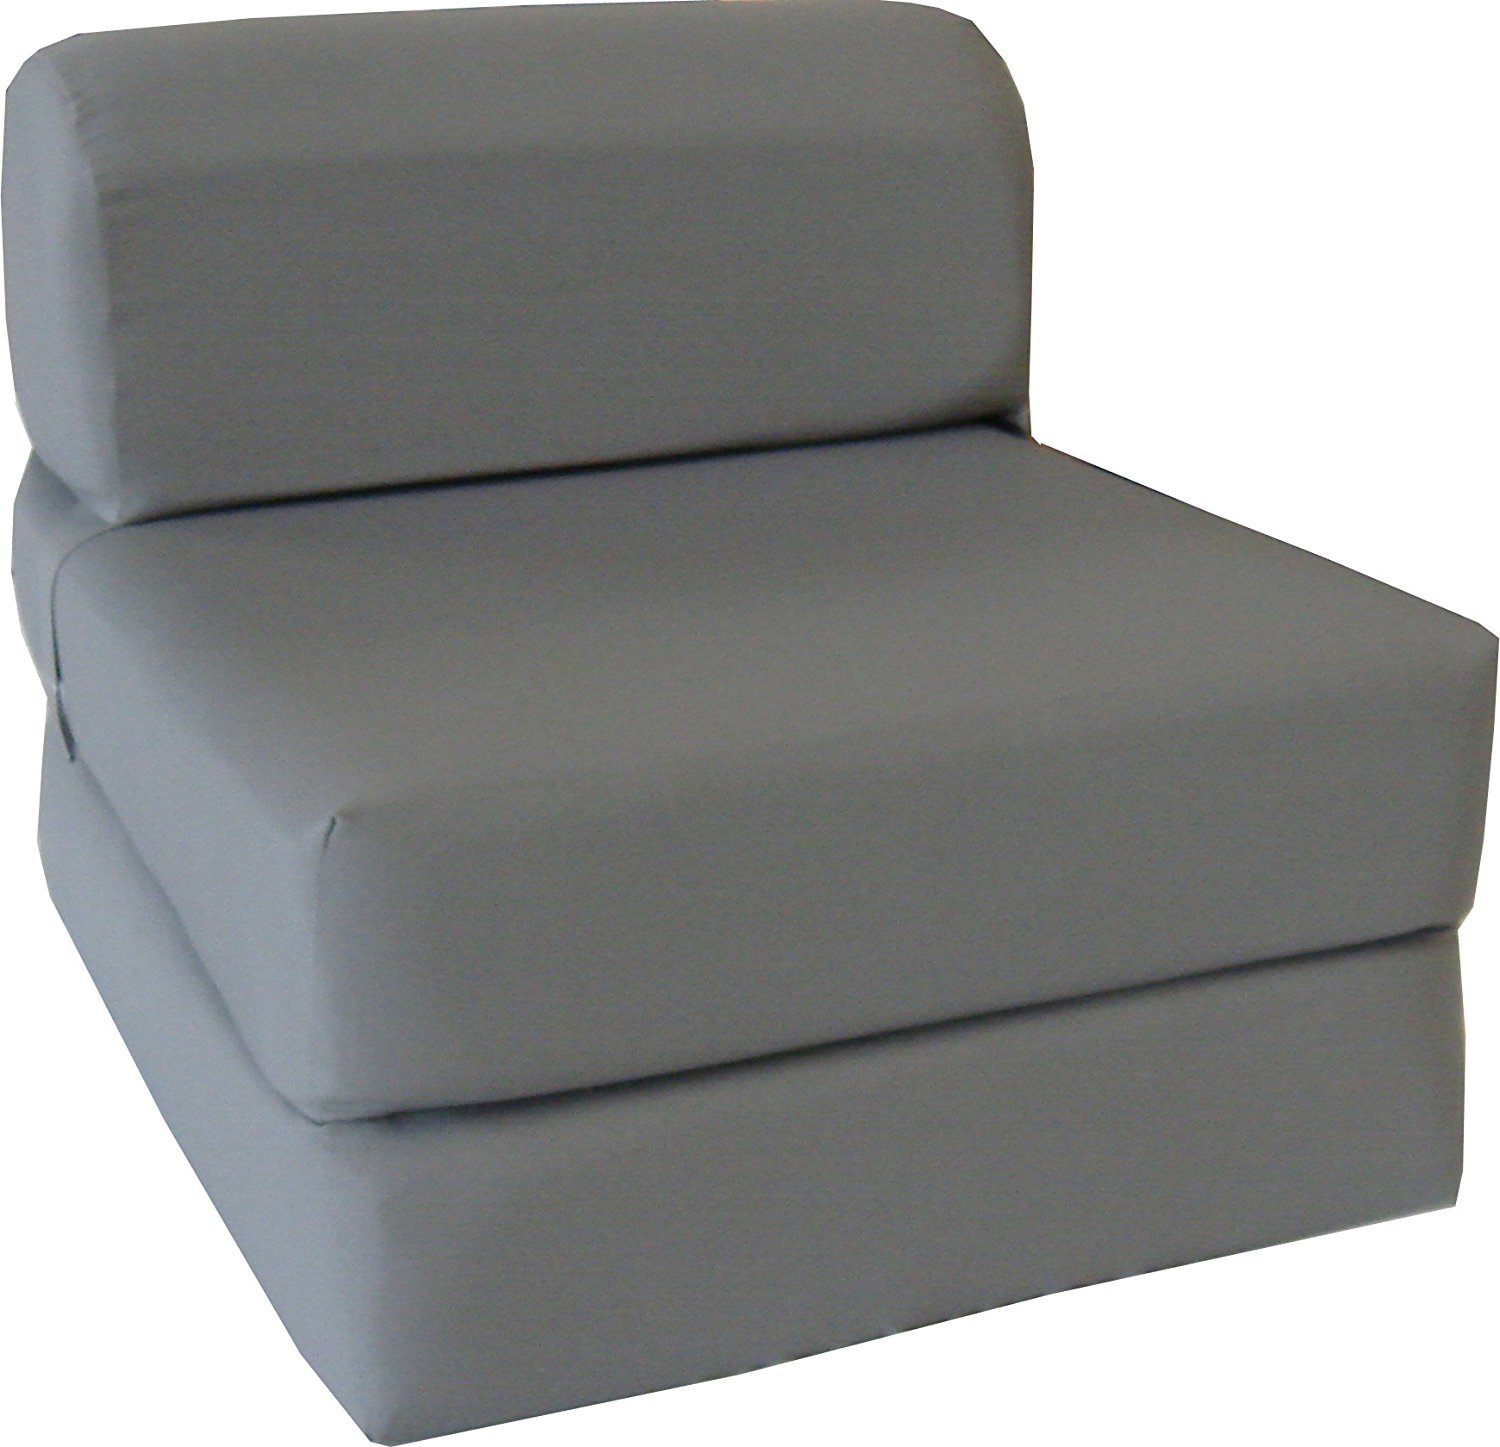 bed with sofa amazon.com: gray sleeper chair folding foam bed sized 6 XOZASUJ